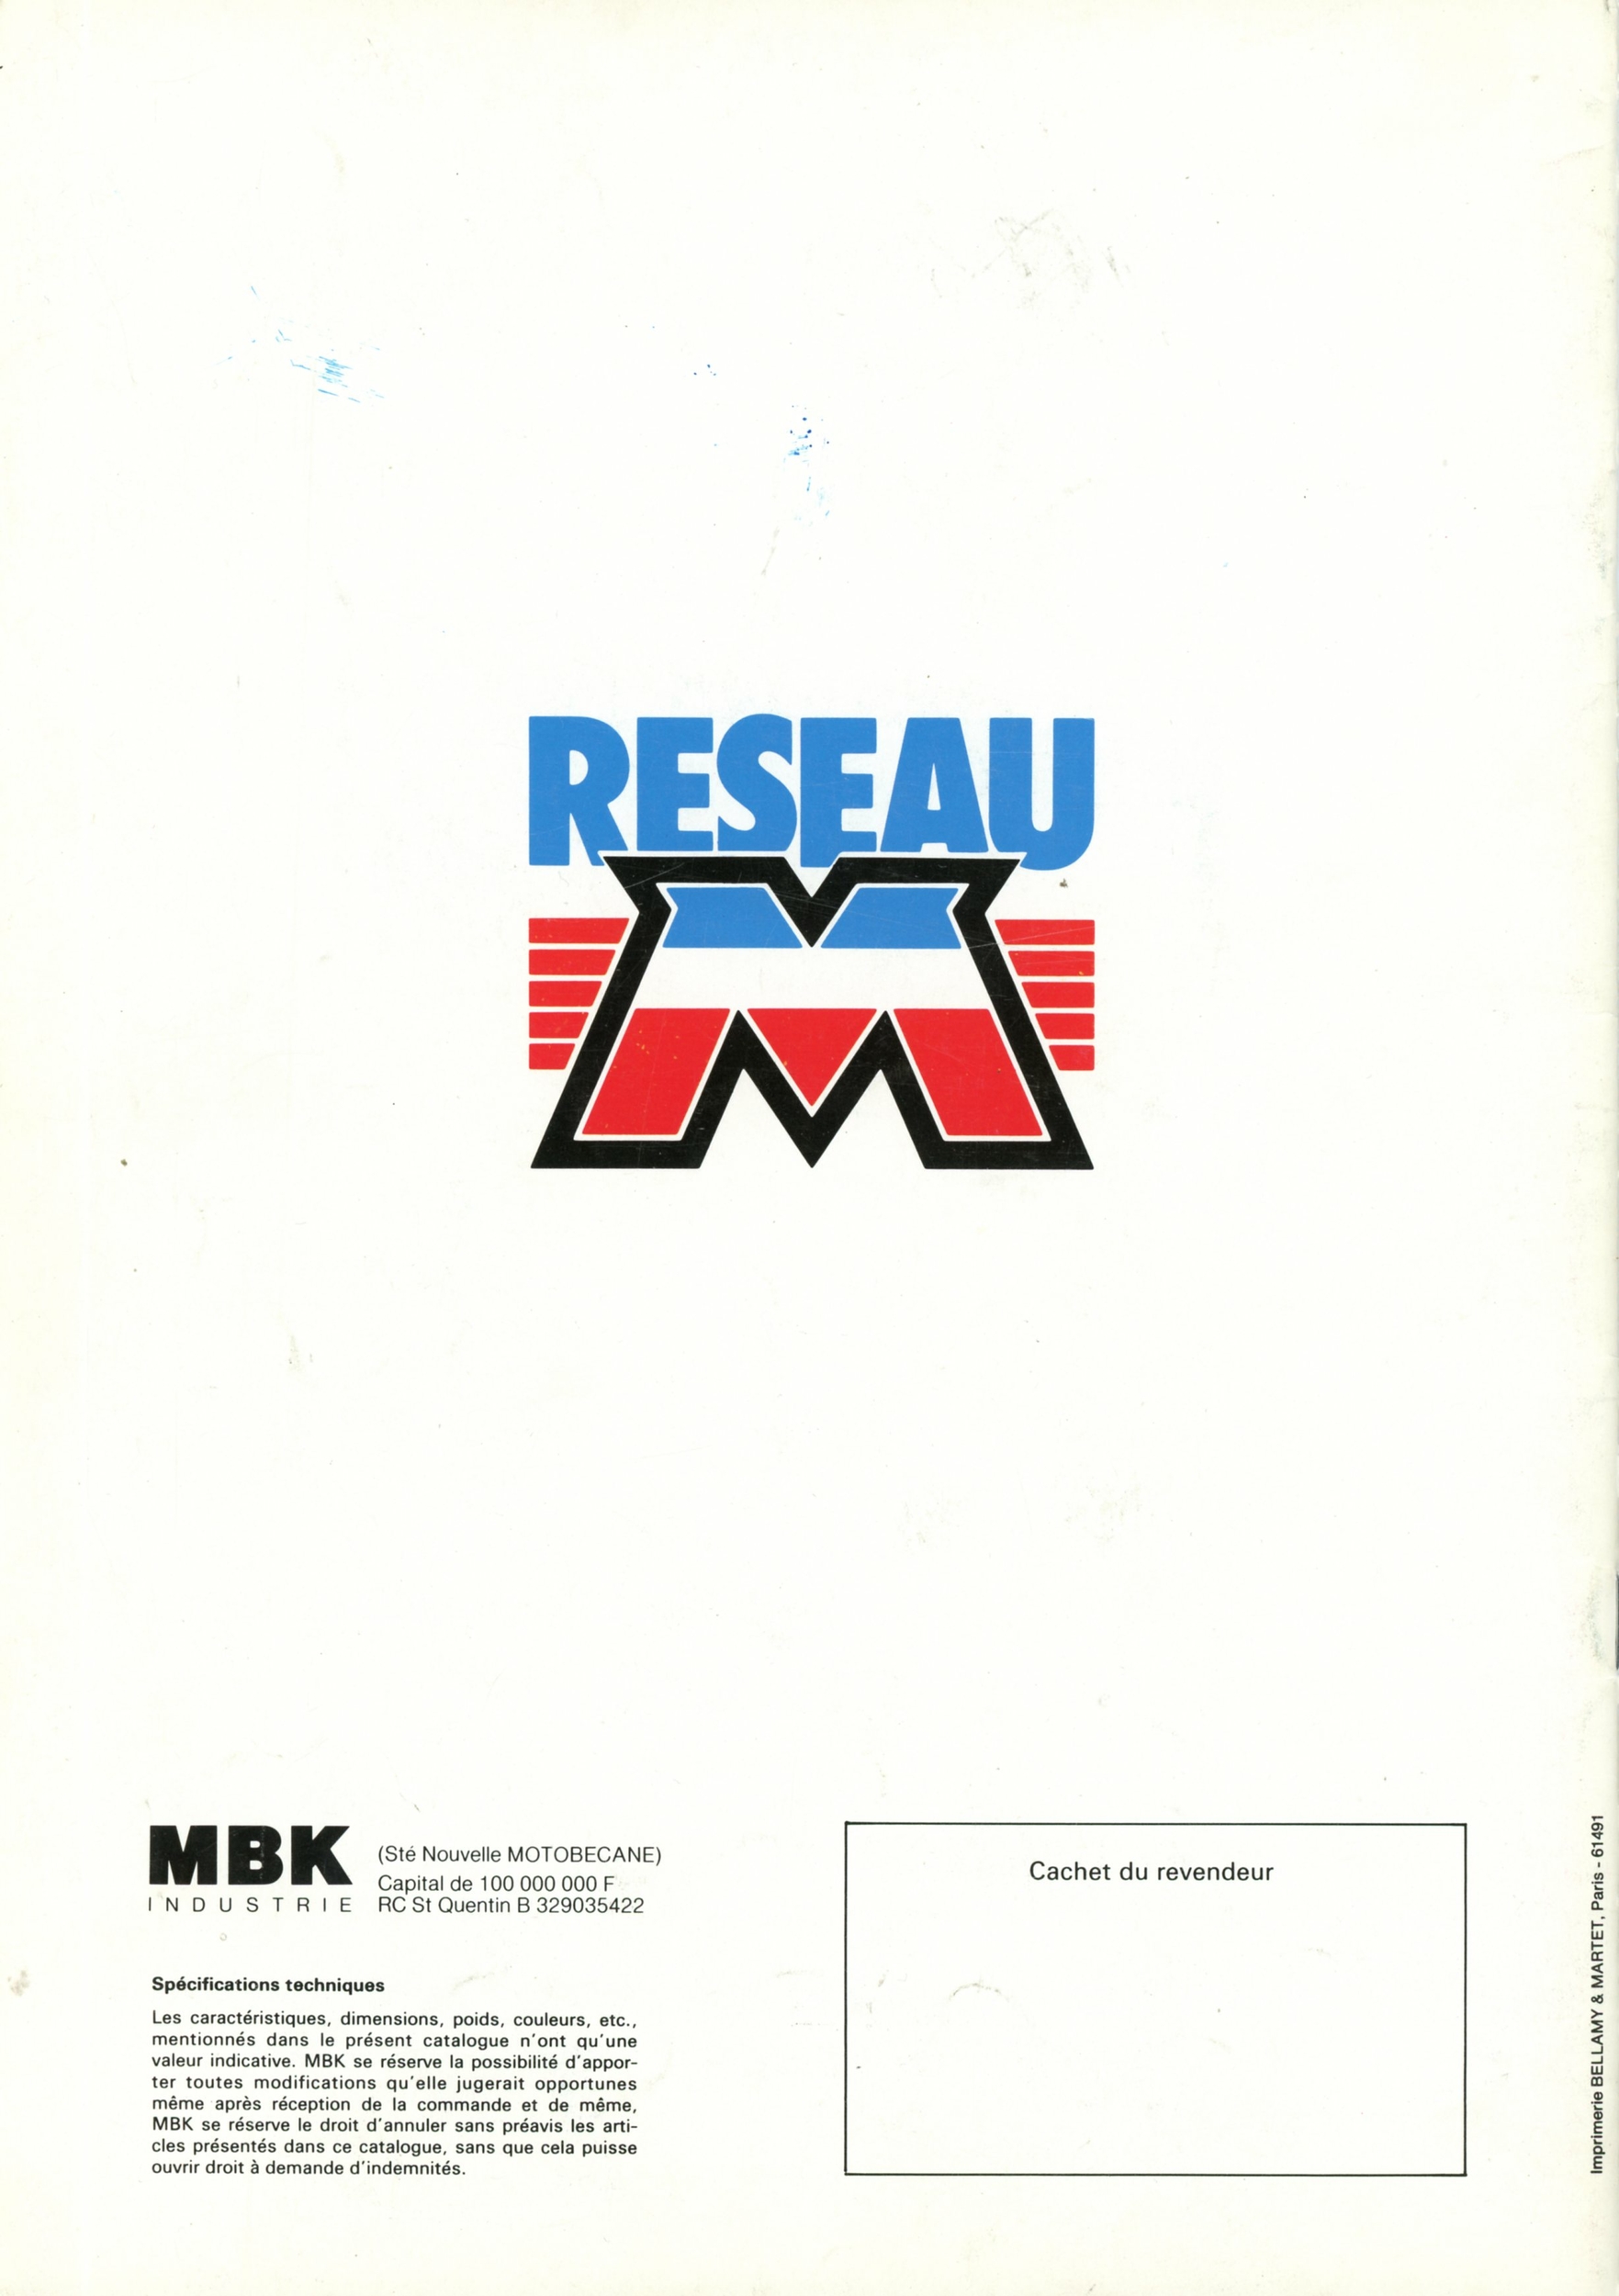 BROCHURE-RESEAU-LA-BOUTIQUE-MBK-MOTOBECANE-TYPE-51-BMX-VELO-1986-LEMASTERBROCKERS